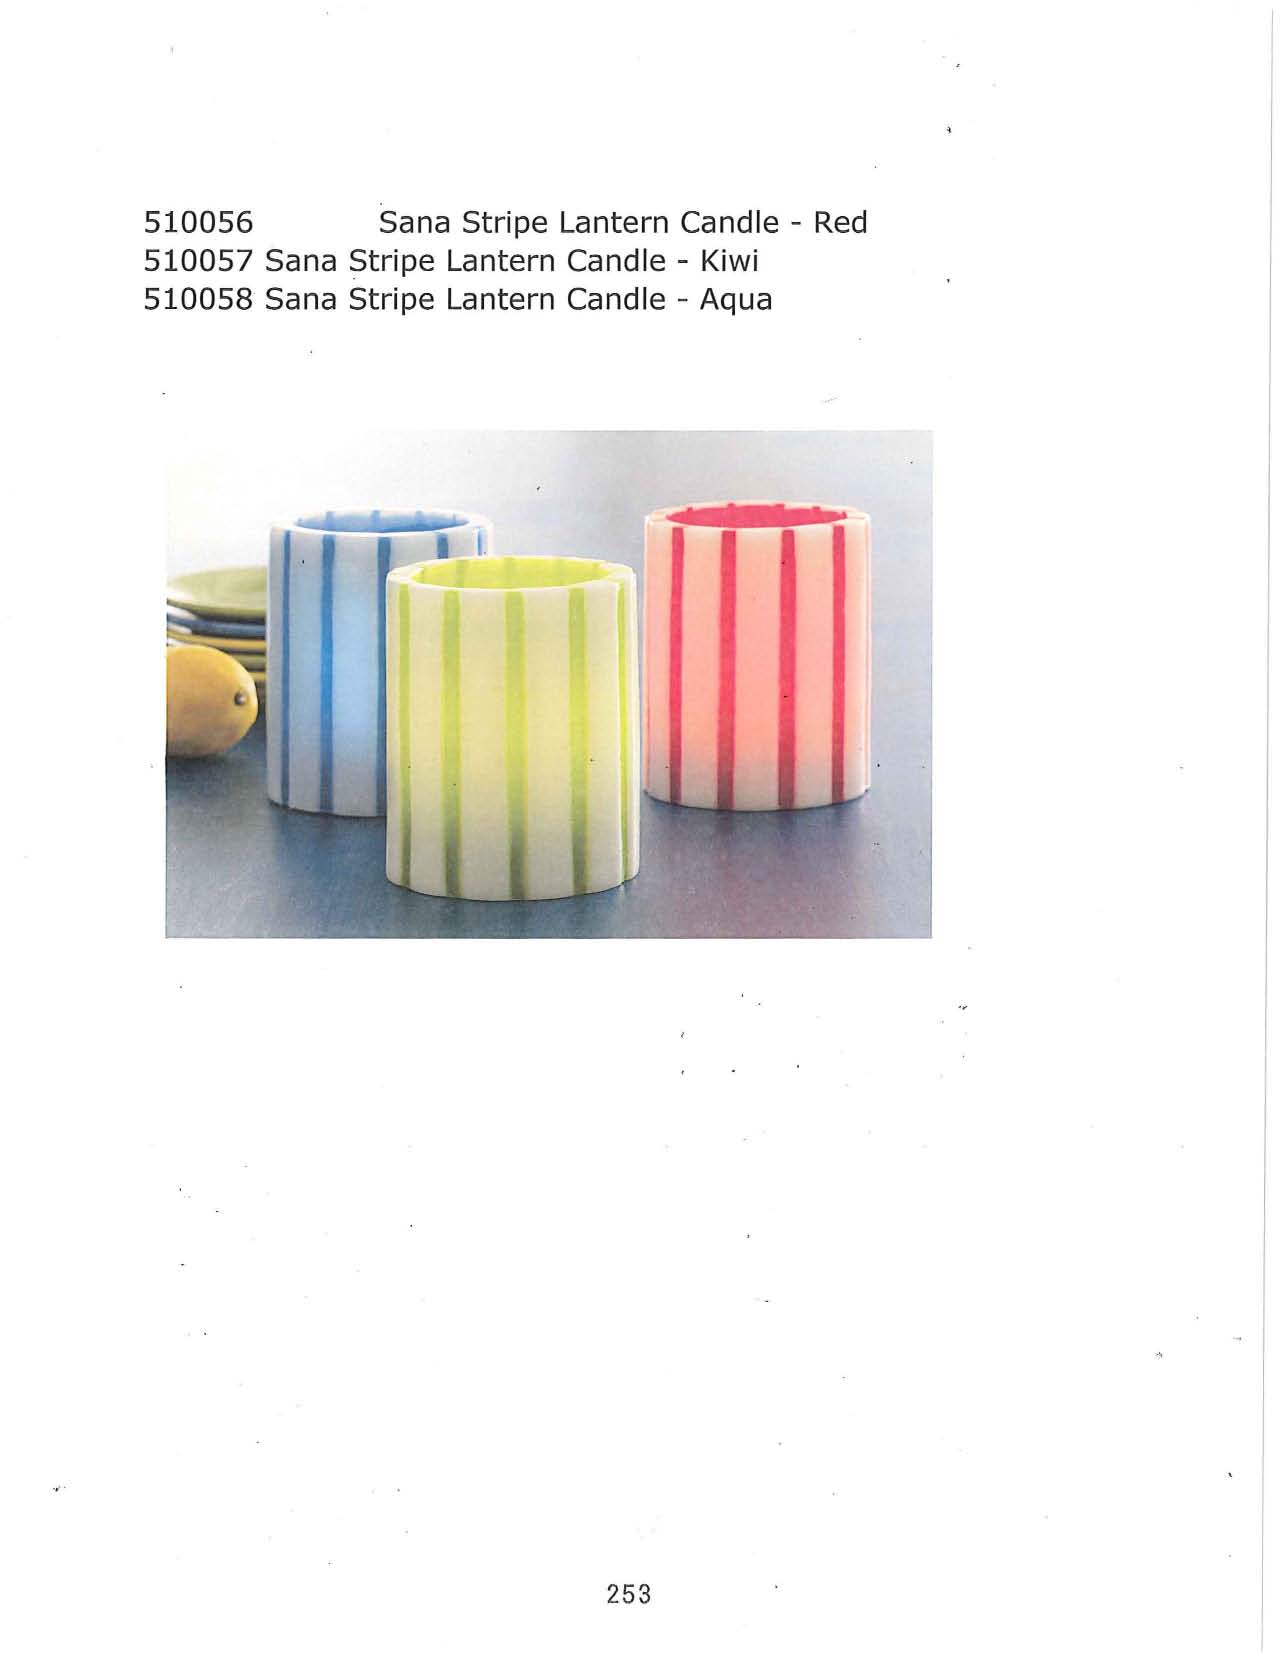 Sana Stripe Lantern Candle - Red, Kiwi, Aqua